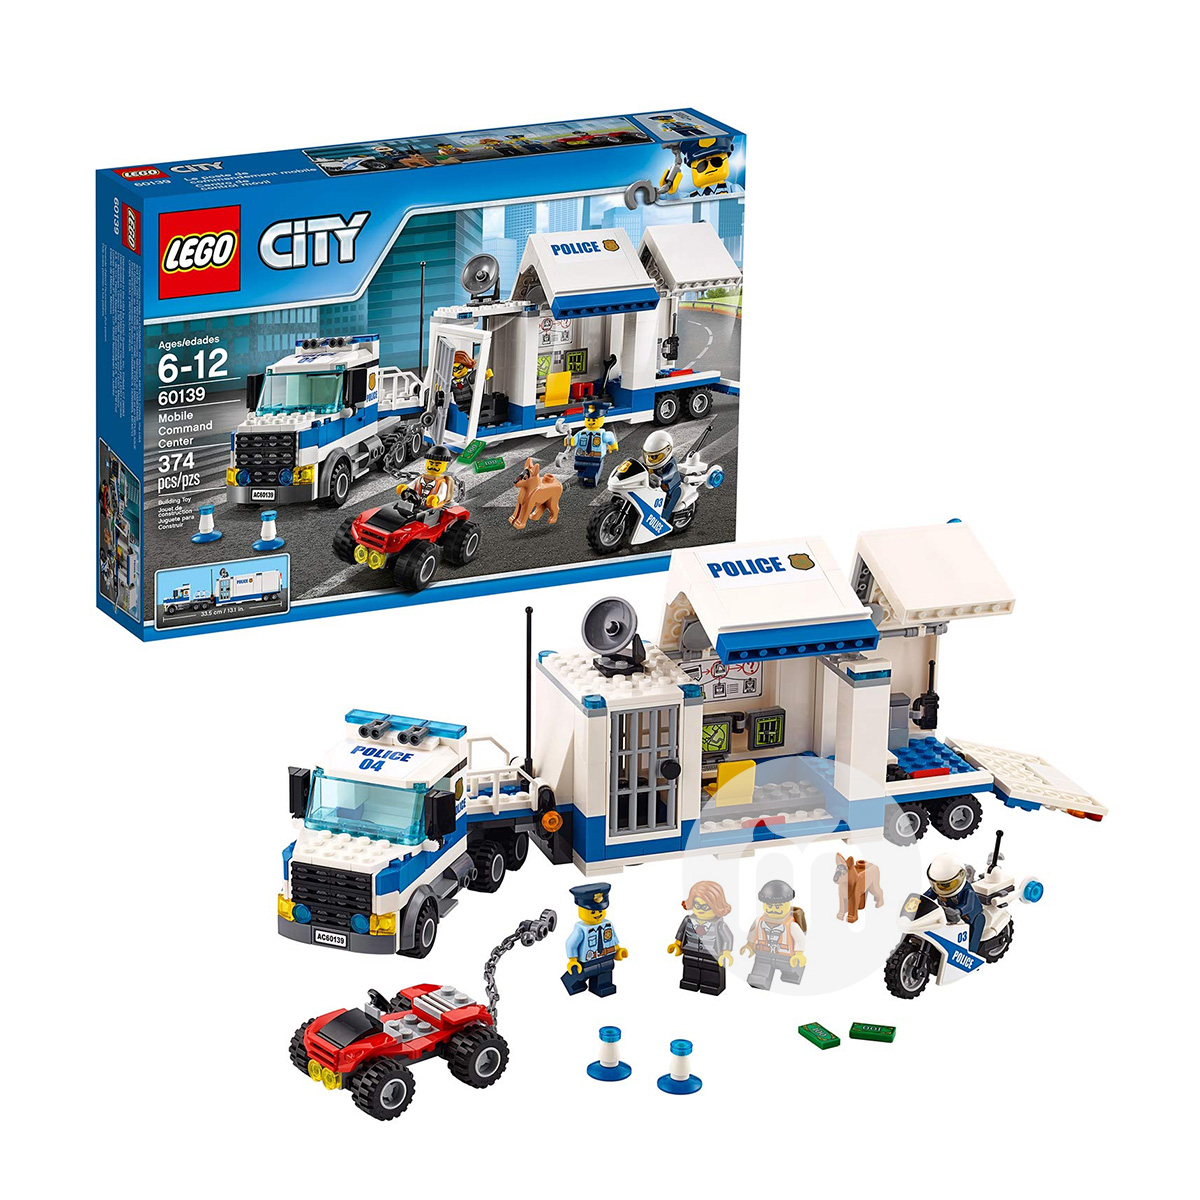 LEGO 덴마크시티시리즈모바일커맨드센터 60139 해외판